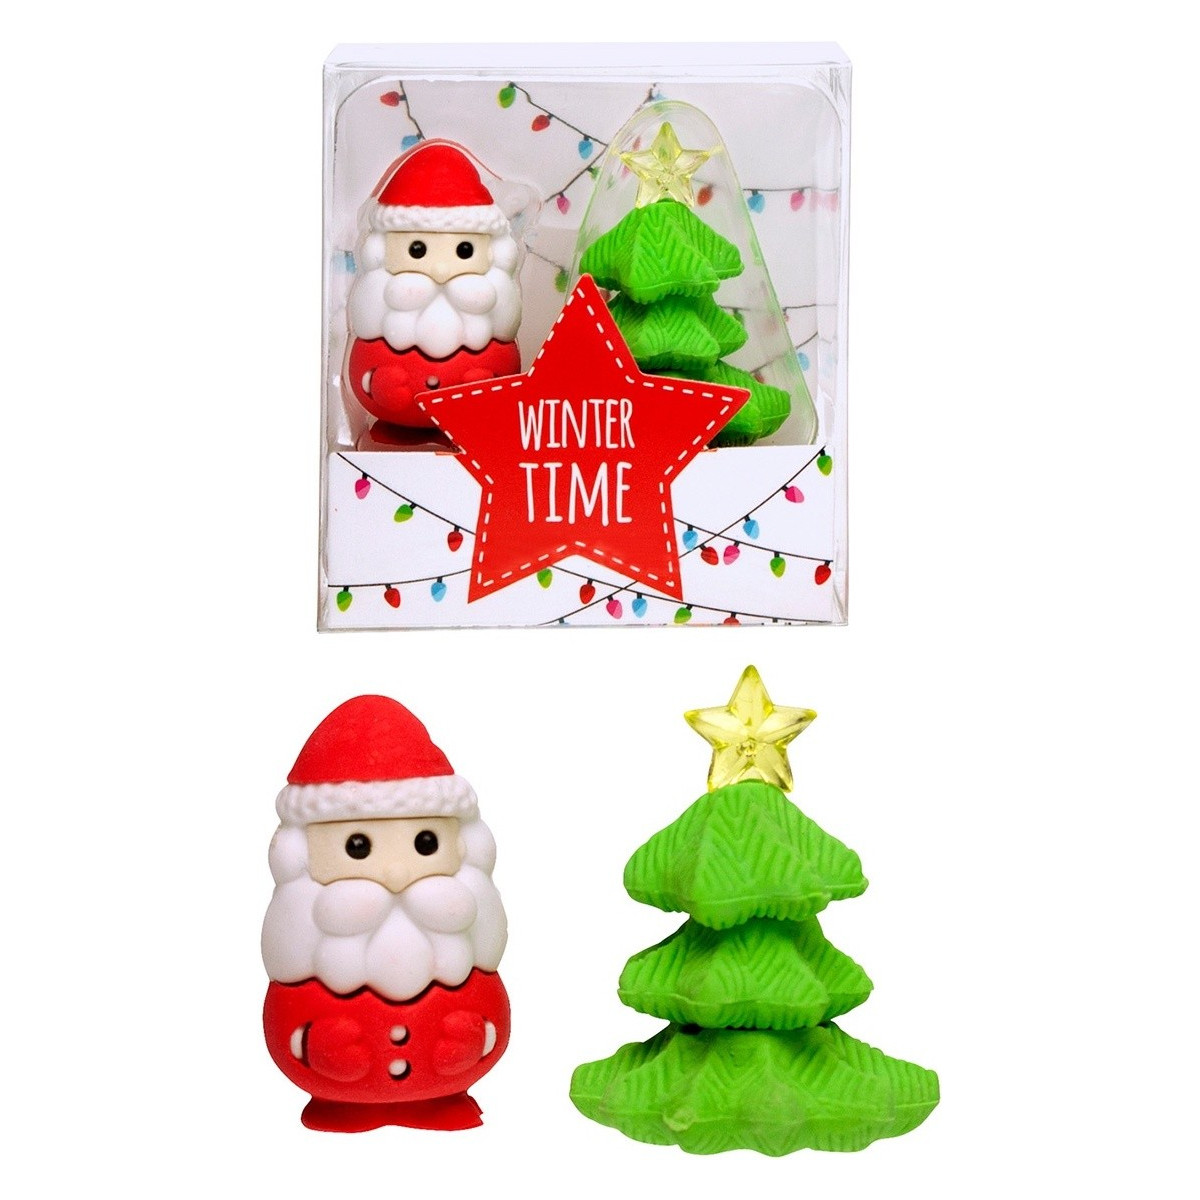 Set de 2 gomas de borrar navideñas para niños